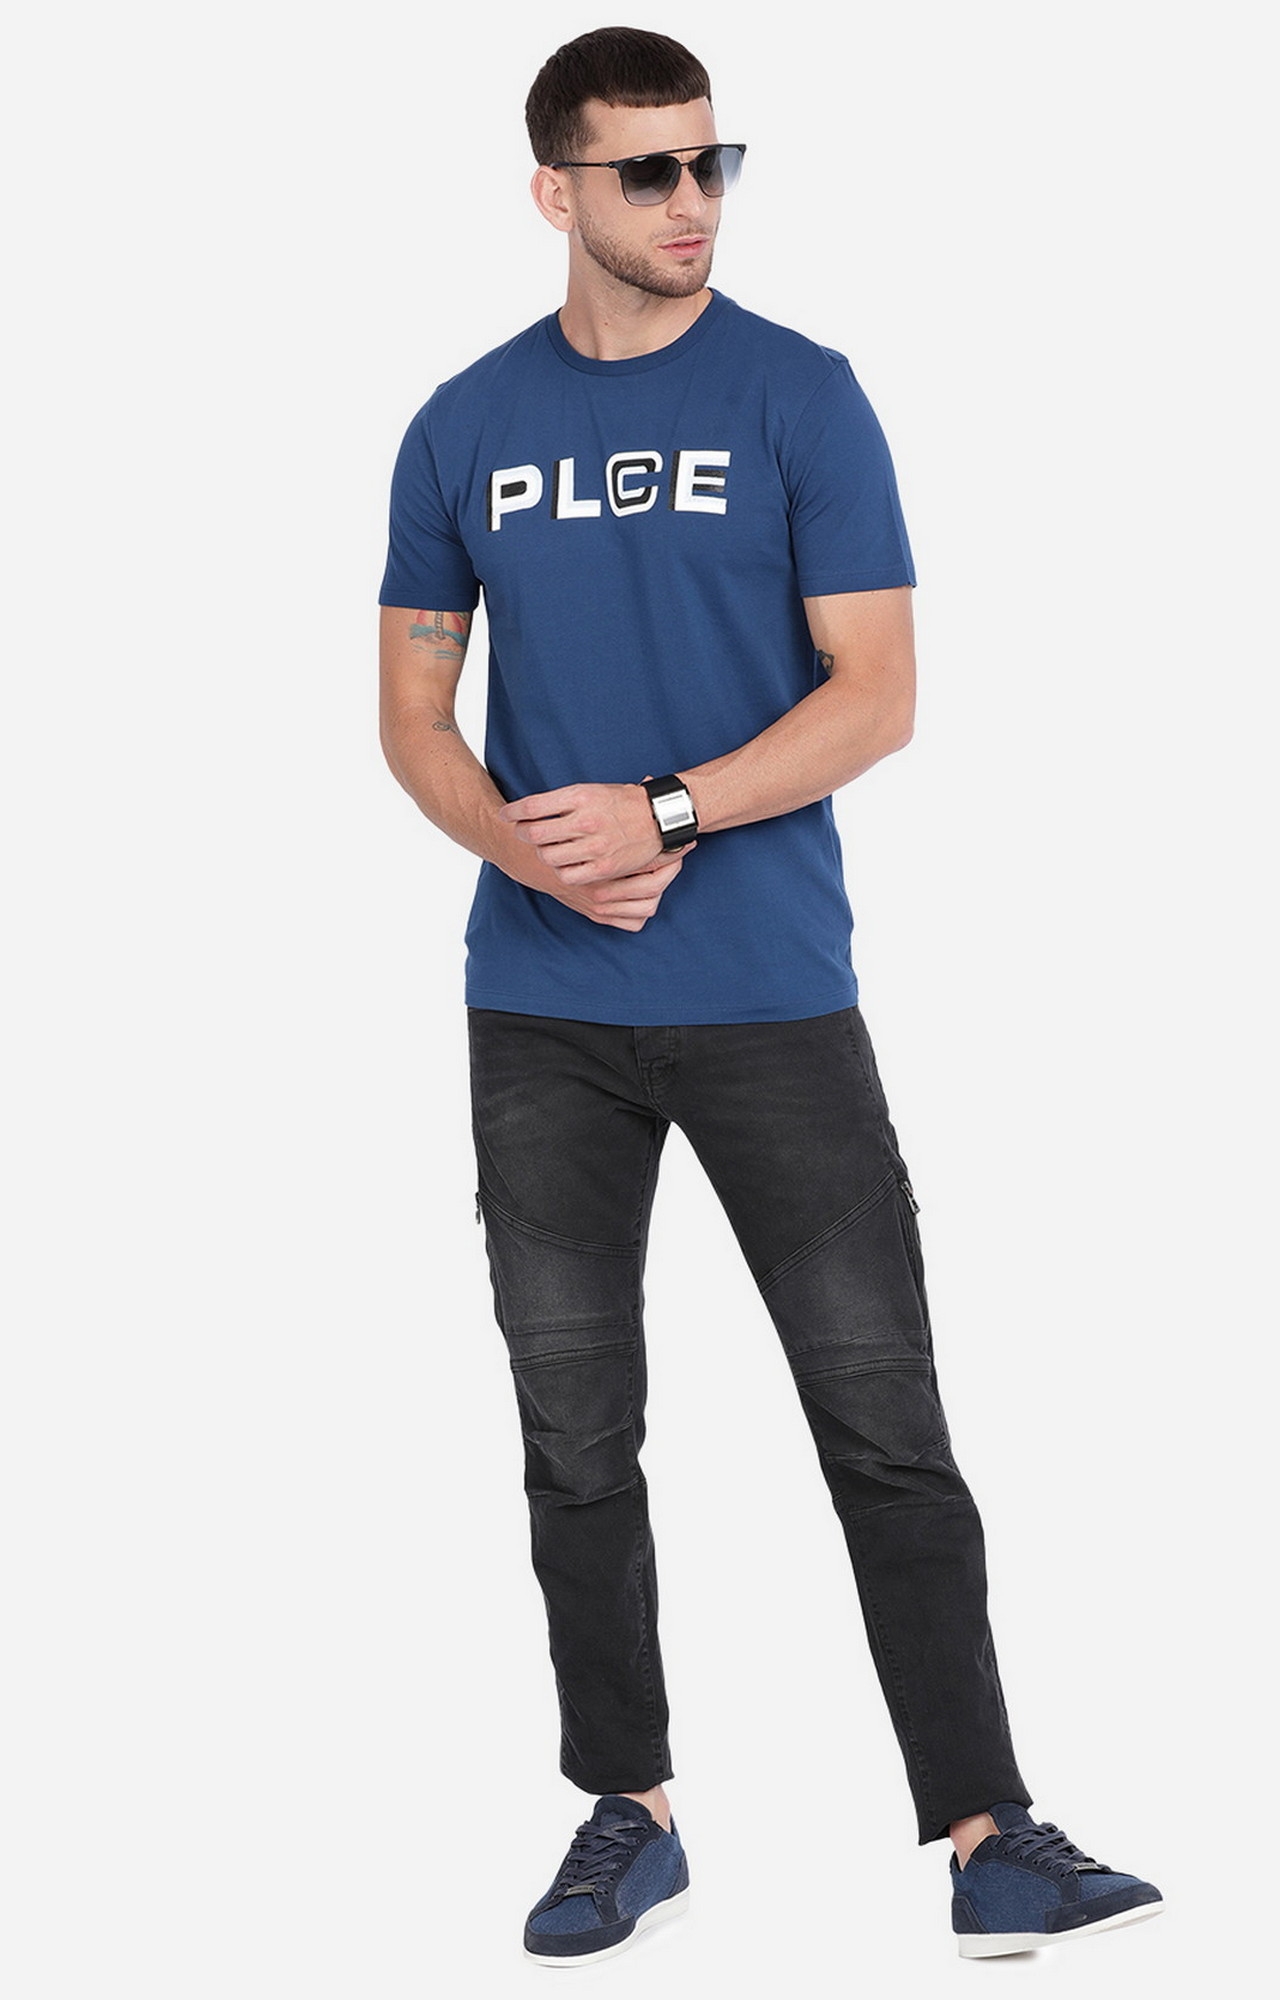 883 Police | Men's Navy Cotton Typographic Printed T-Shirt 8